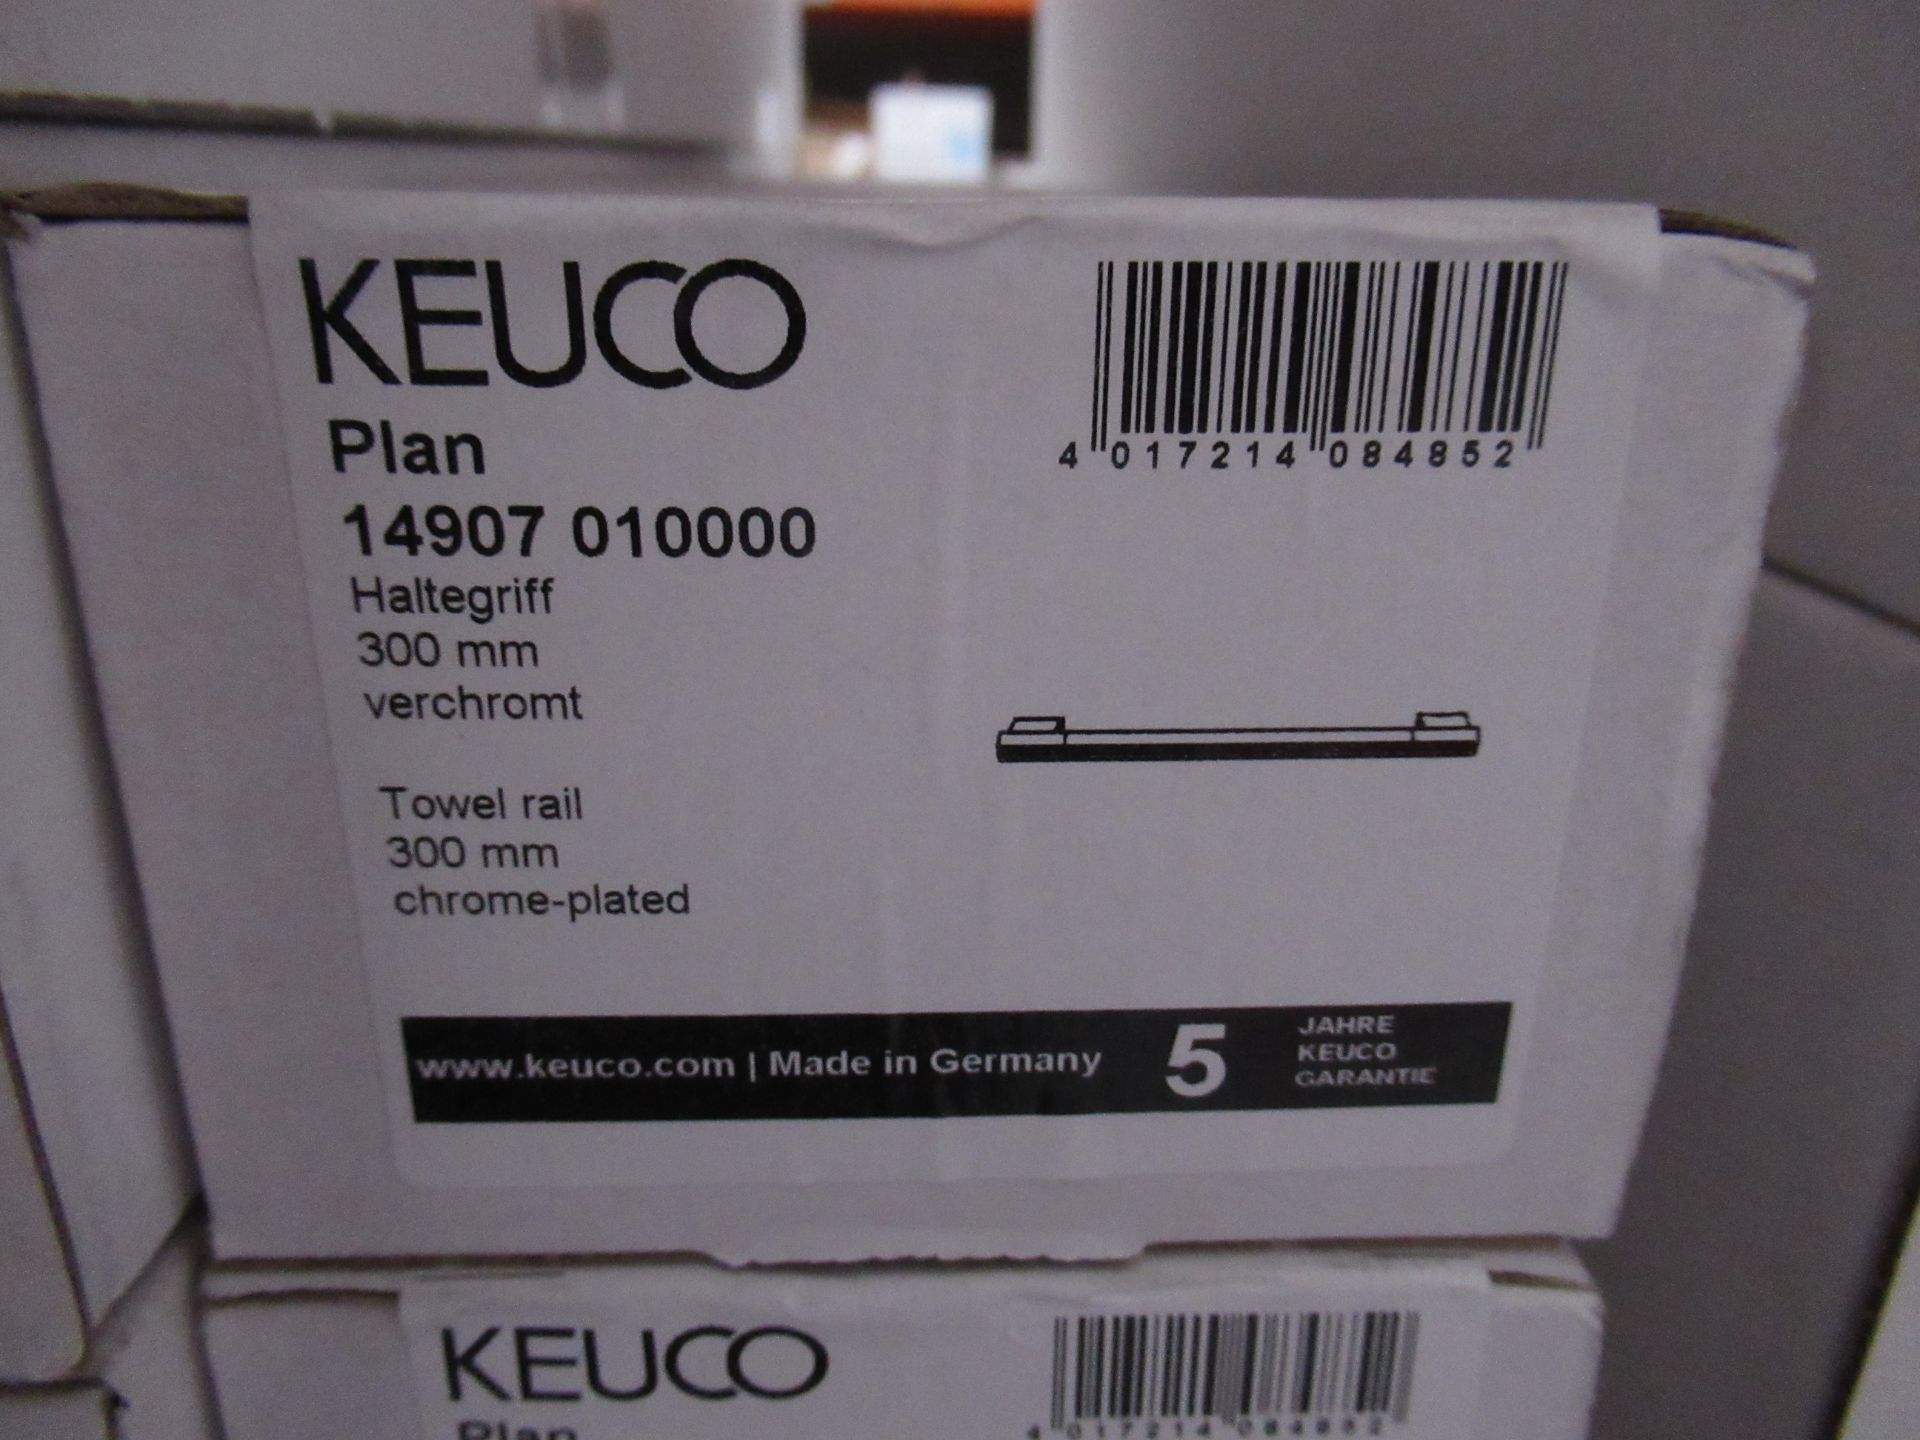 2 x Keuco Plan Towel Rail Chrome Plated, P/N 14907-010000 - Image 2 of 2